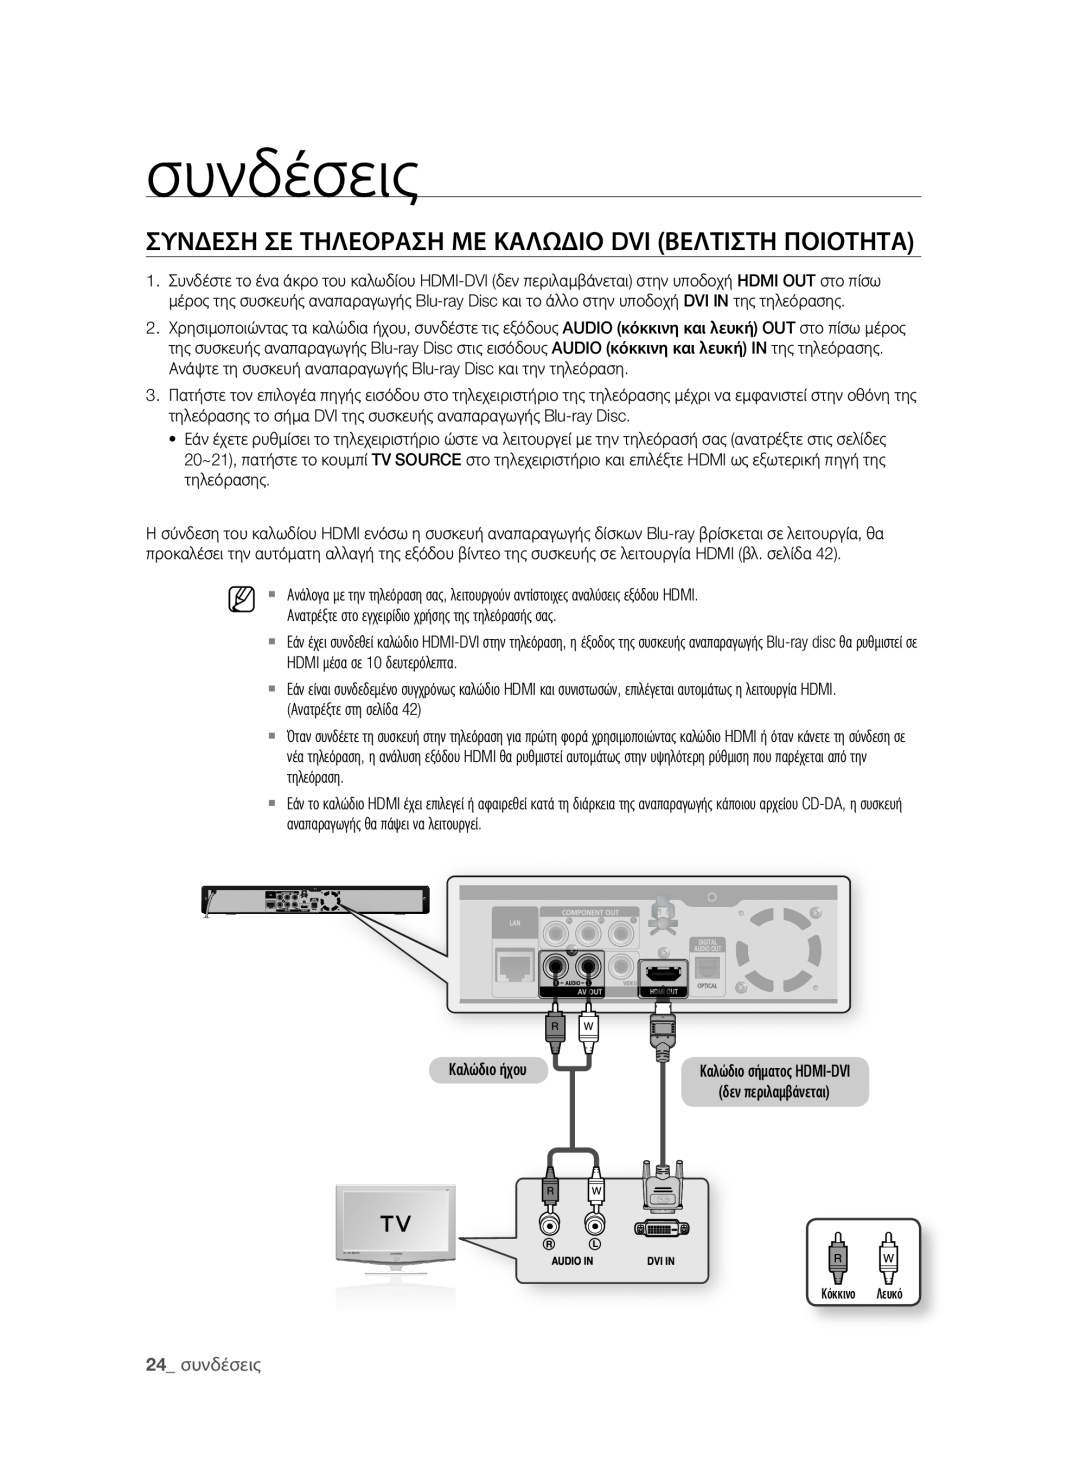 Samsung BD-P1580/EDC manual σΥΝδεση σε ΤηΛεορΑση Με ΚΑΛΩδιο DVI βεΛΤισΤη ΠοιοΤηΤΑ, 2 συνδέσεις 